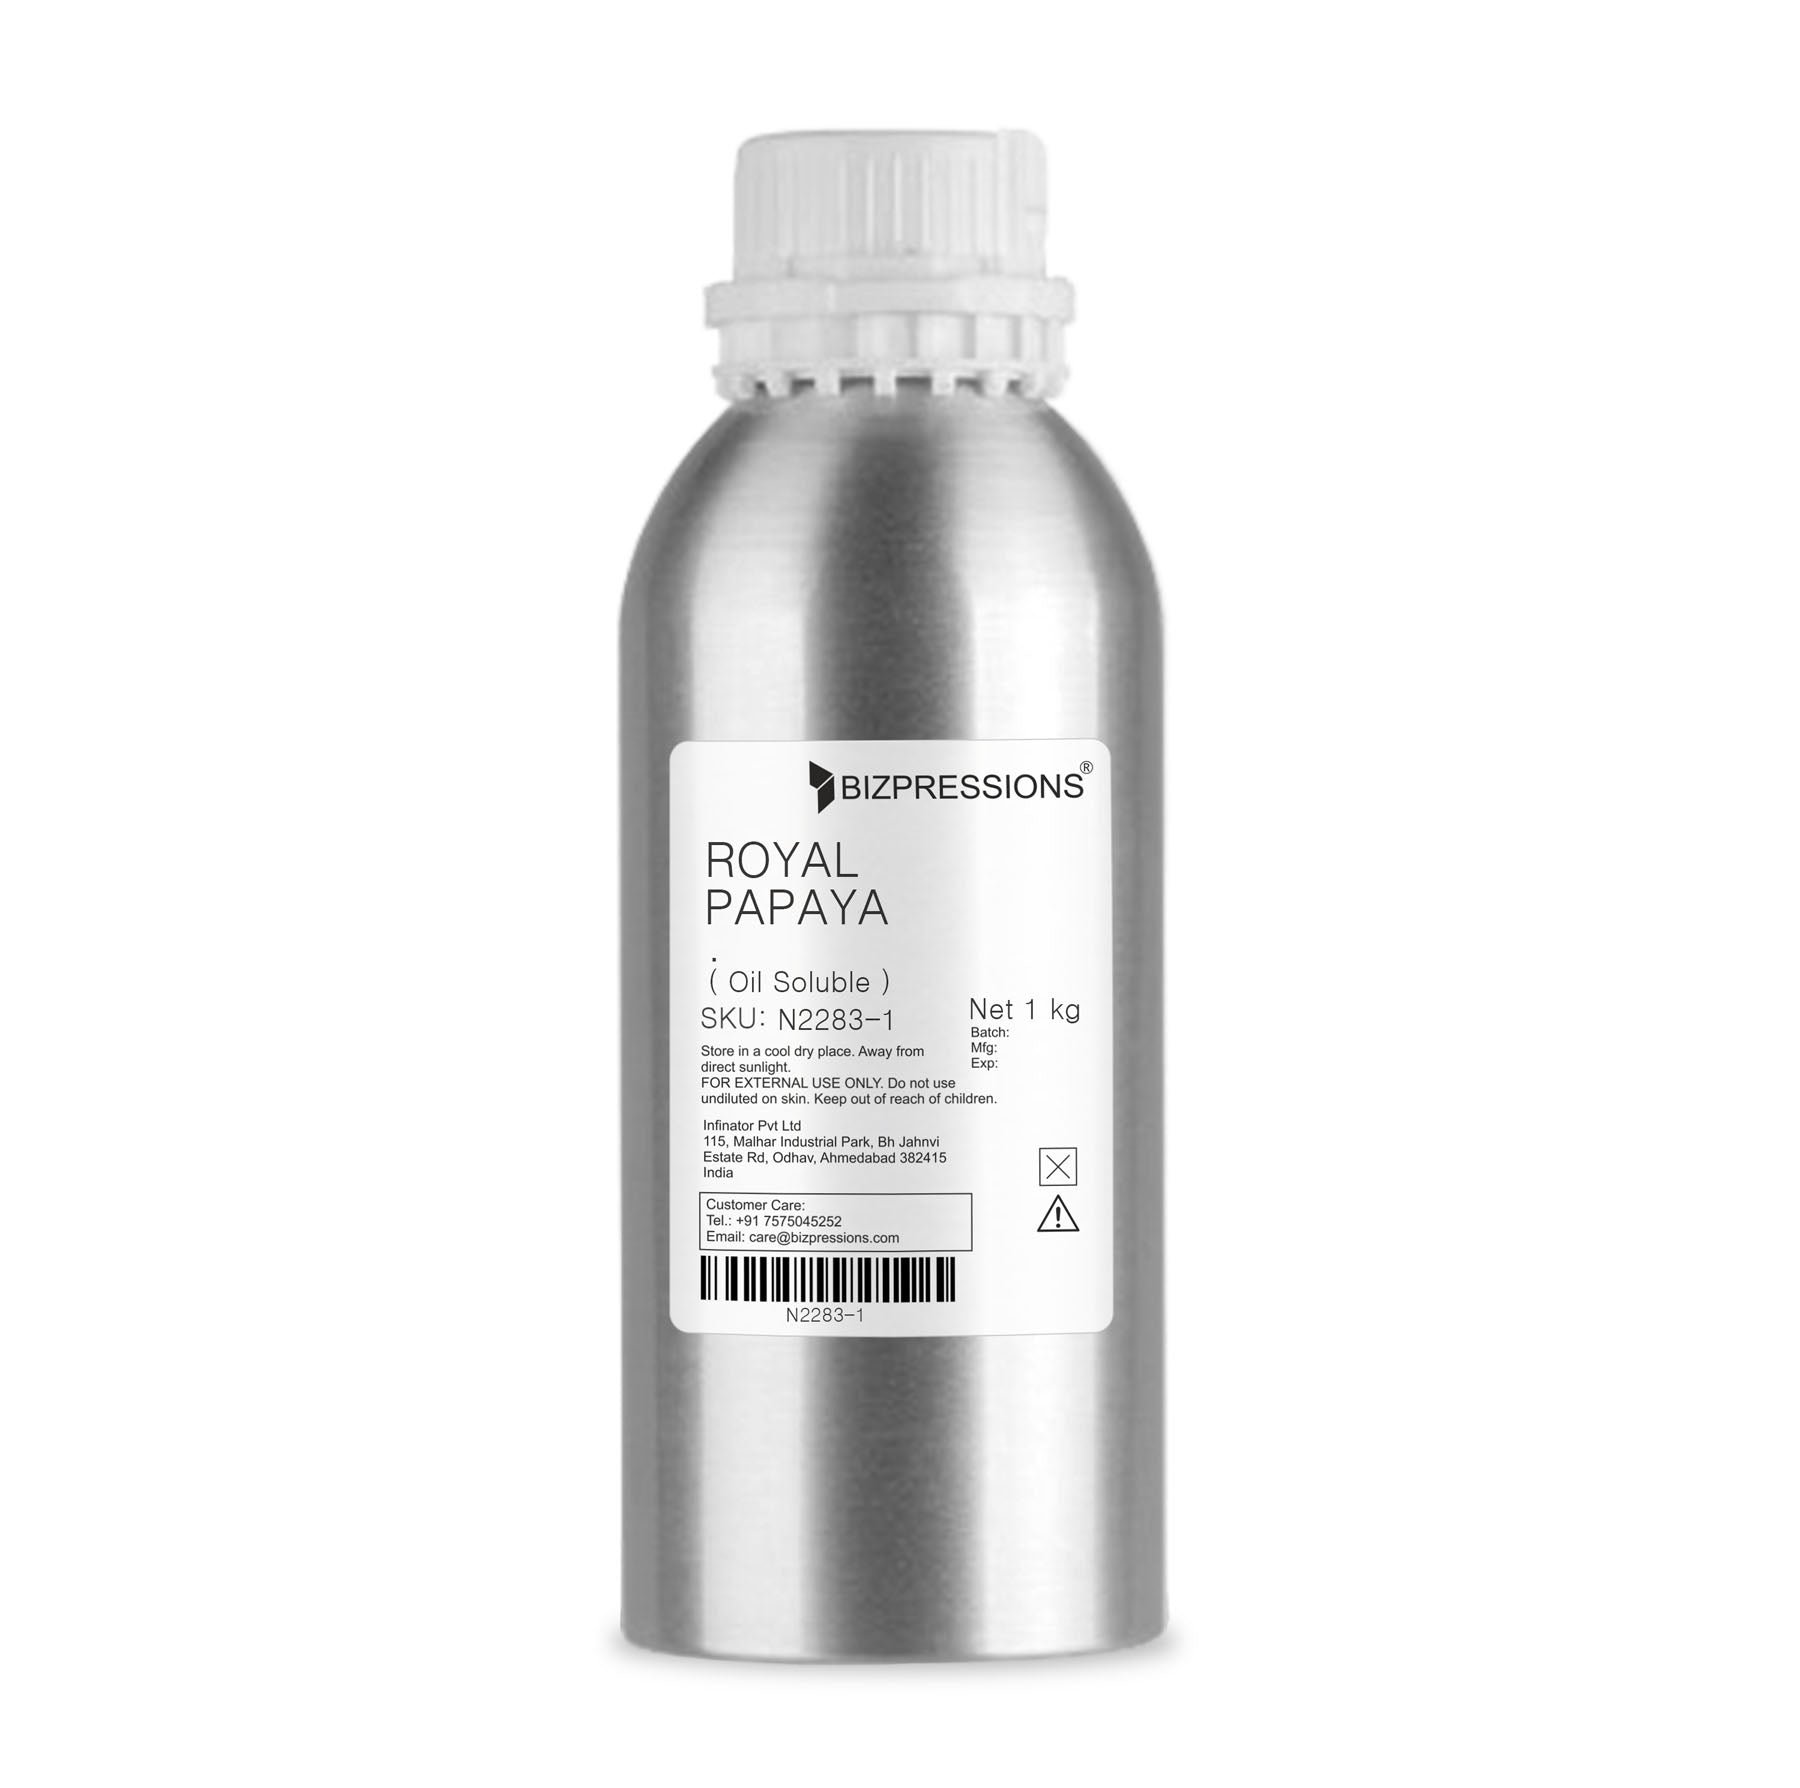 ROYAL PAPAYA - Fragrance ( Oil Soluble ) - 1 kg